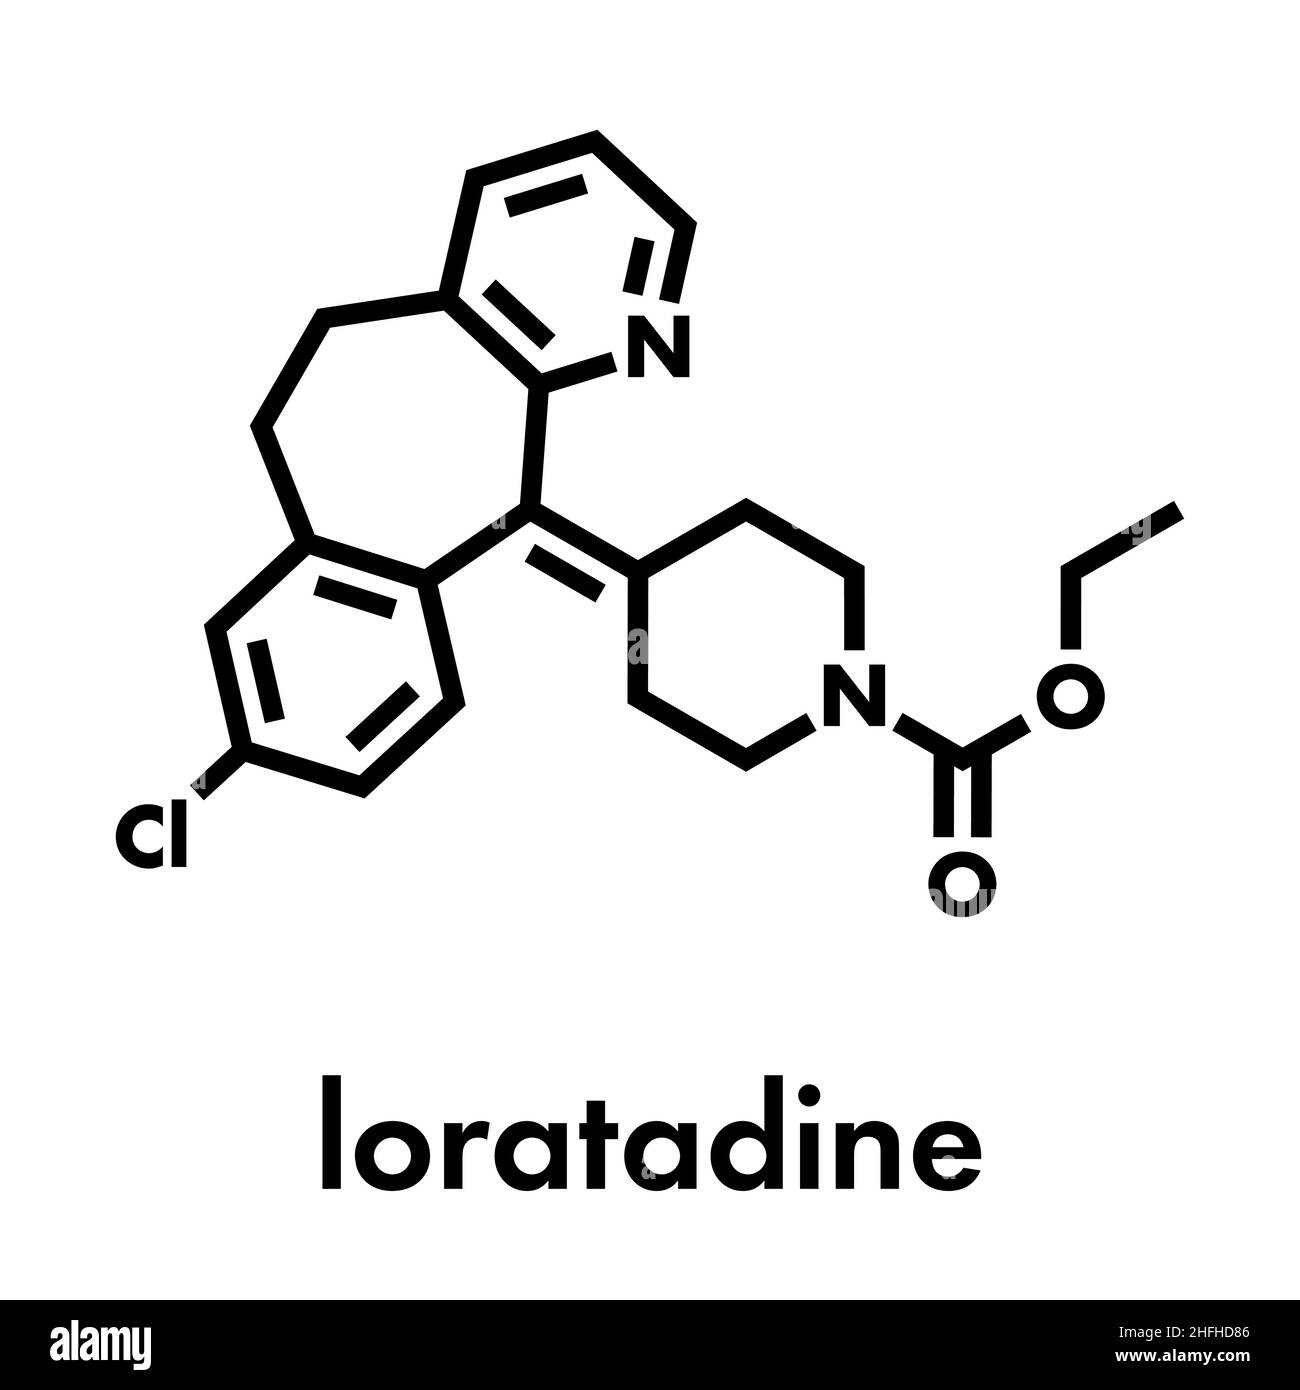 Loratadine antihistamine drug molecule. Used to treat hay fever, urticaria and allergies. Skeletal formula. Stock Vector